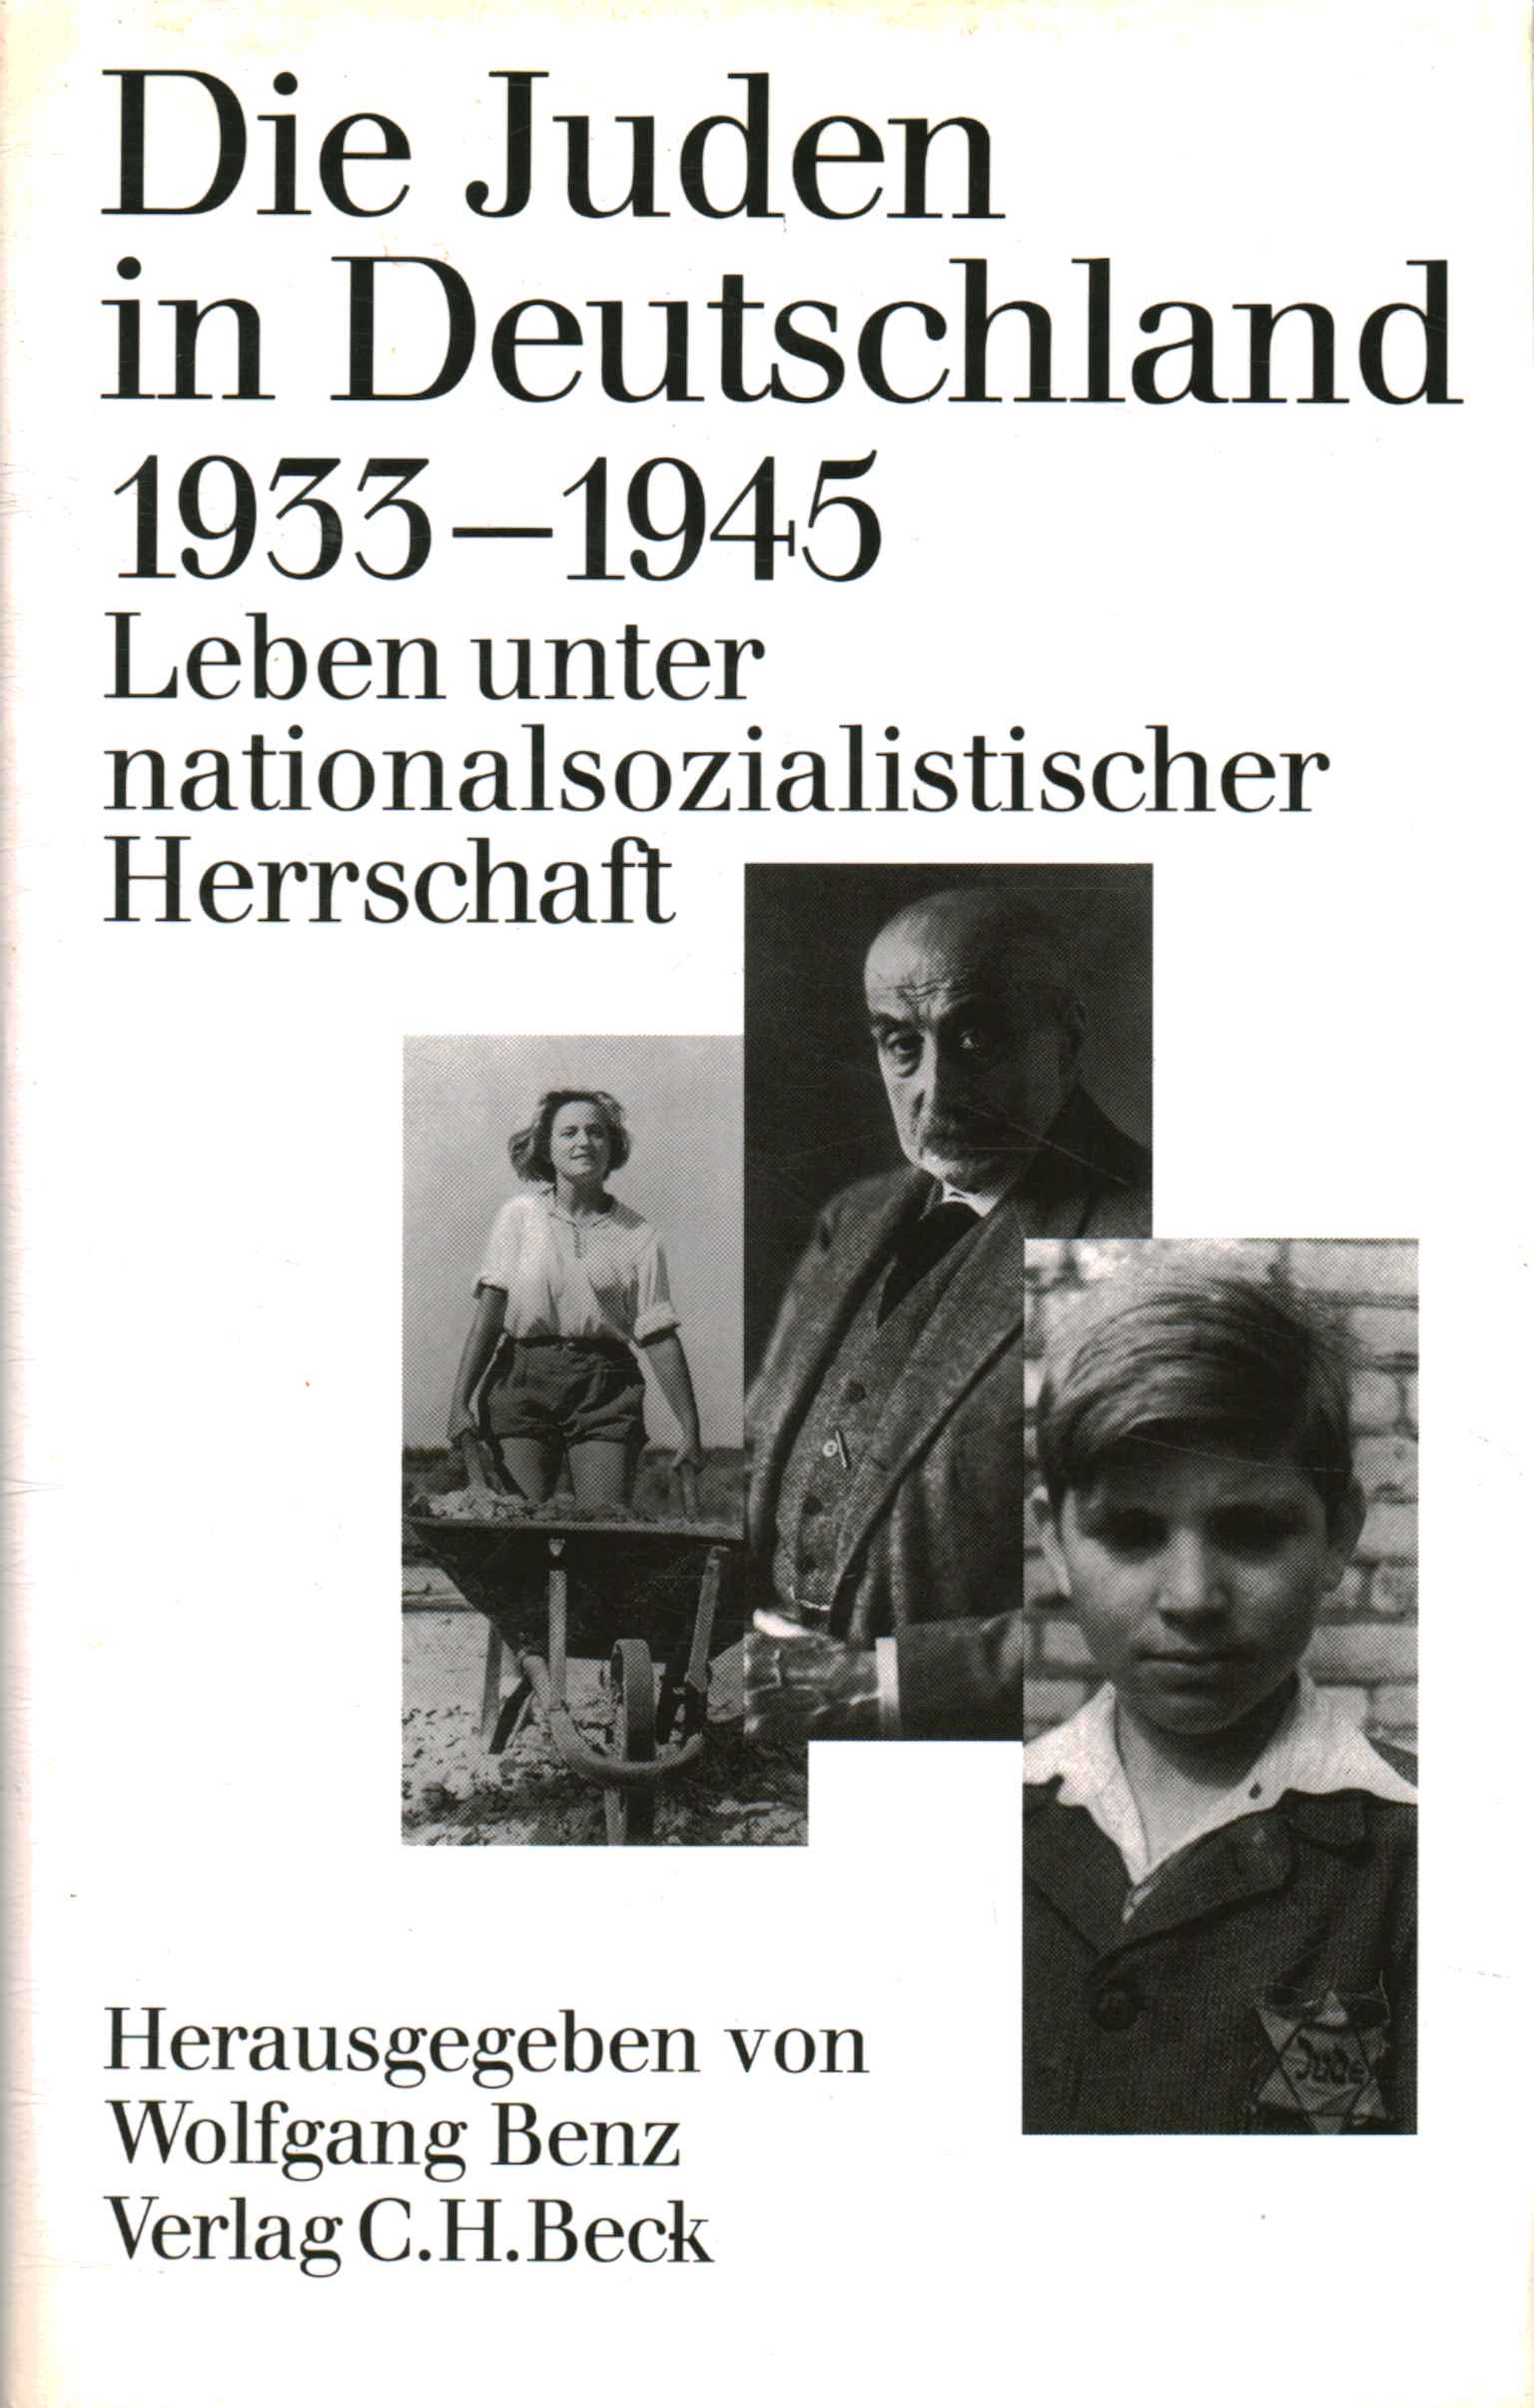 Die Juden en Alemania 1933-1945